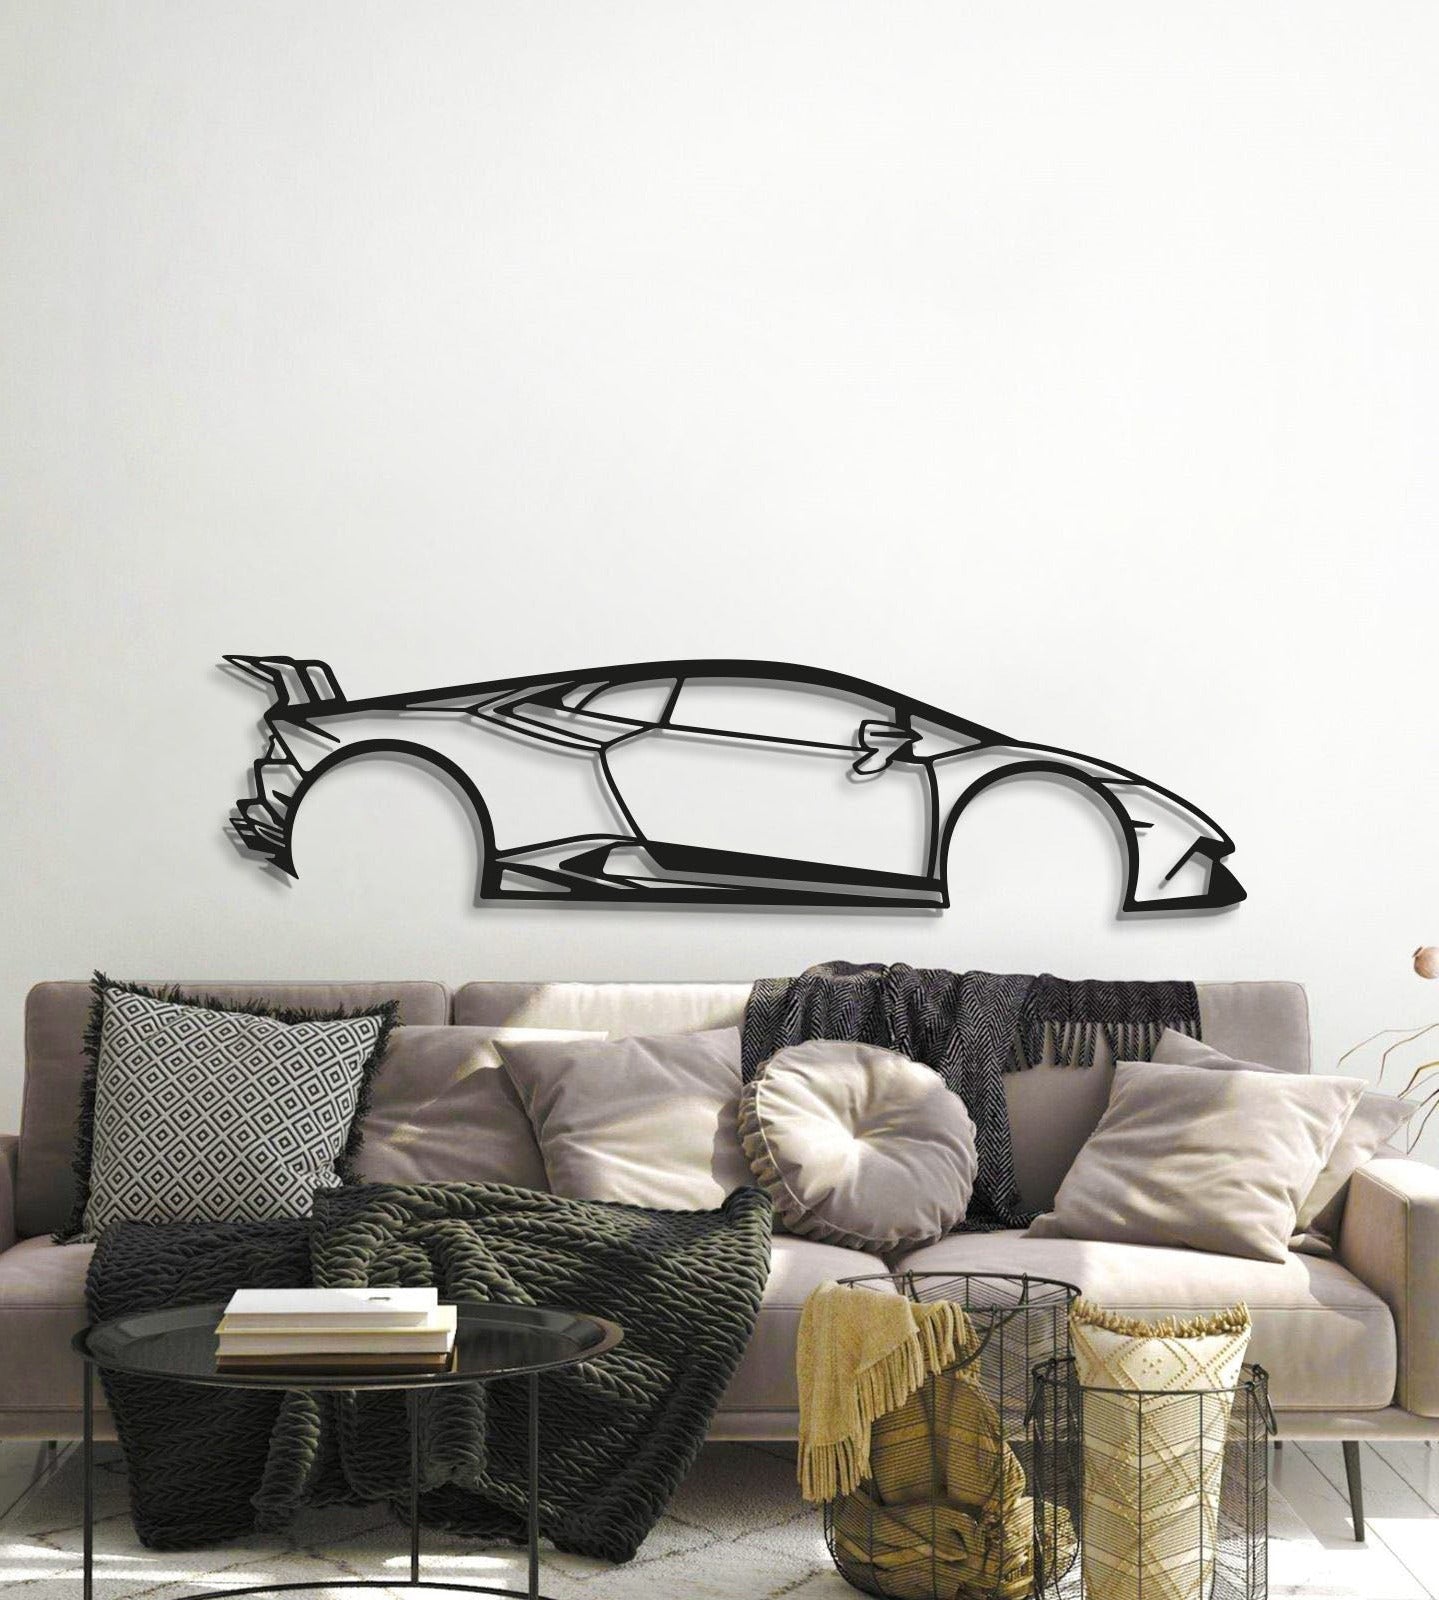 Huracan Performante Metal Car Wall Art - MT0991